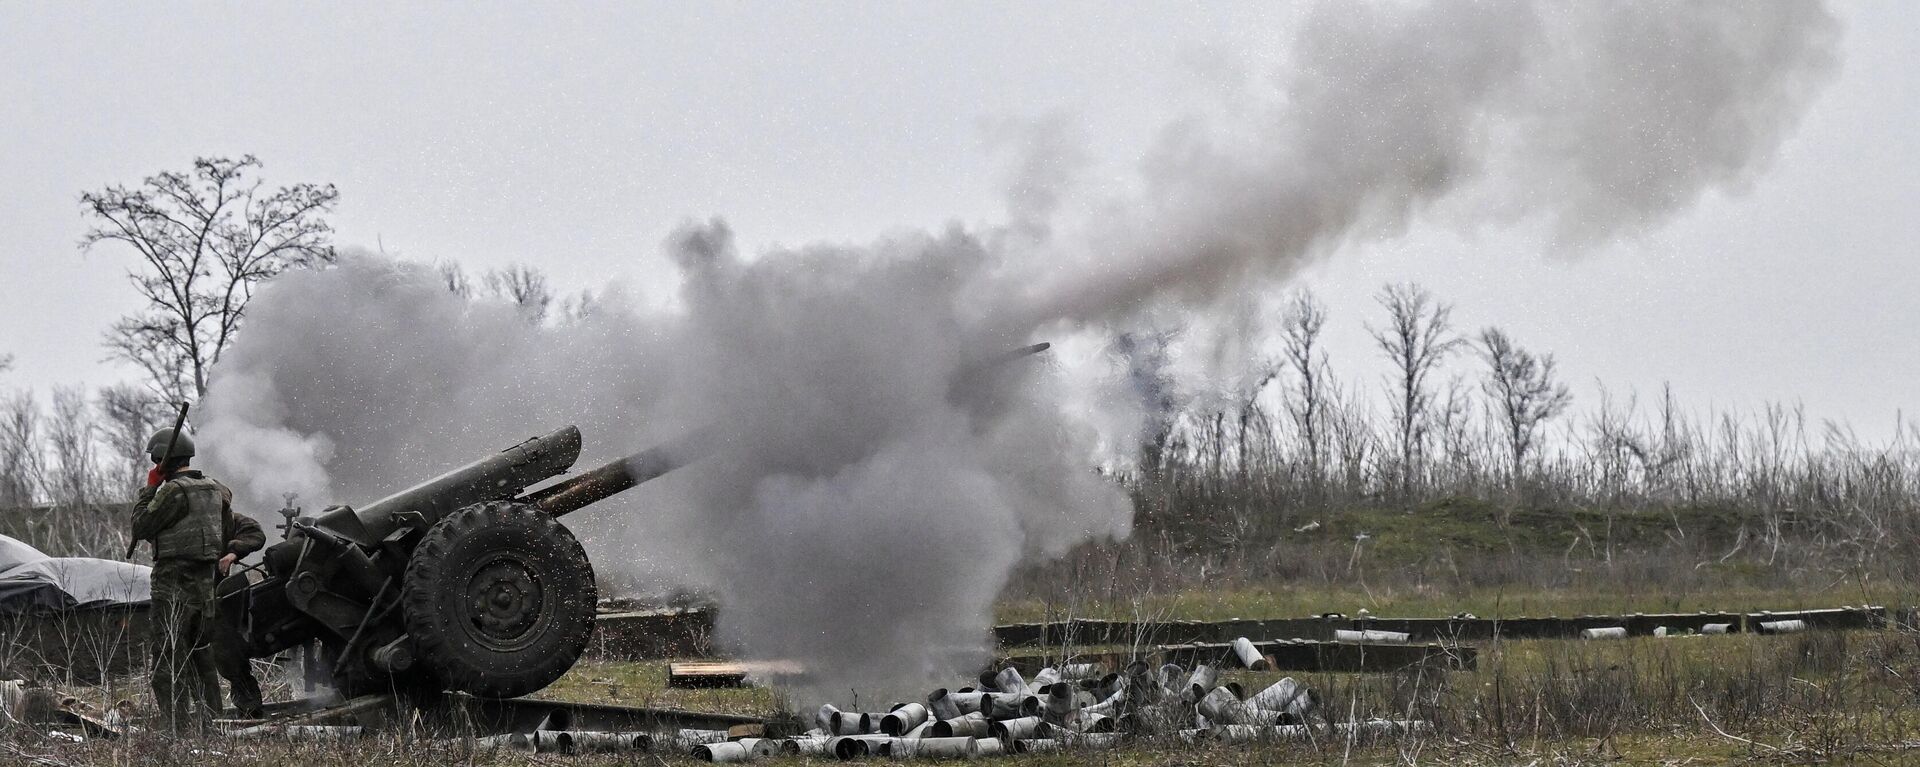 Howitzer D-30 dispara perto de Mariupol, foto publicada em 8 de abril de 2022 - Sputnik Brasil, 1920, 09.04.2022